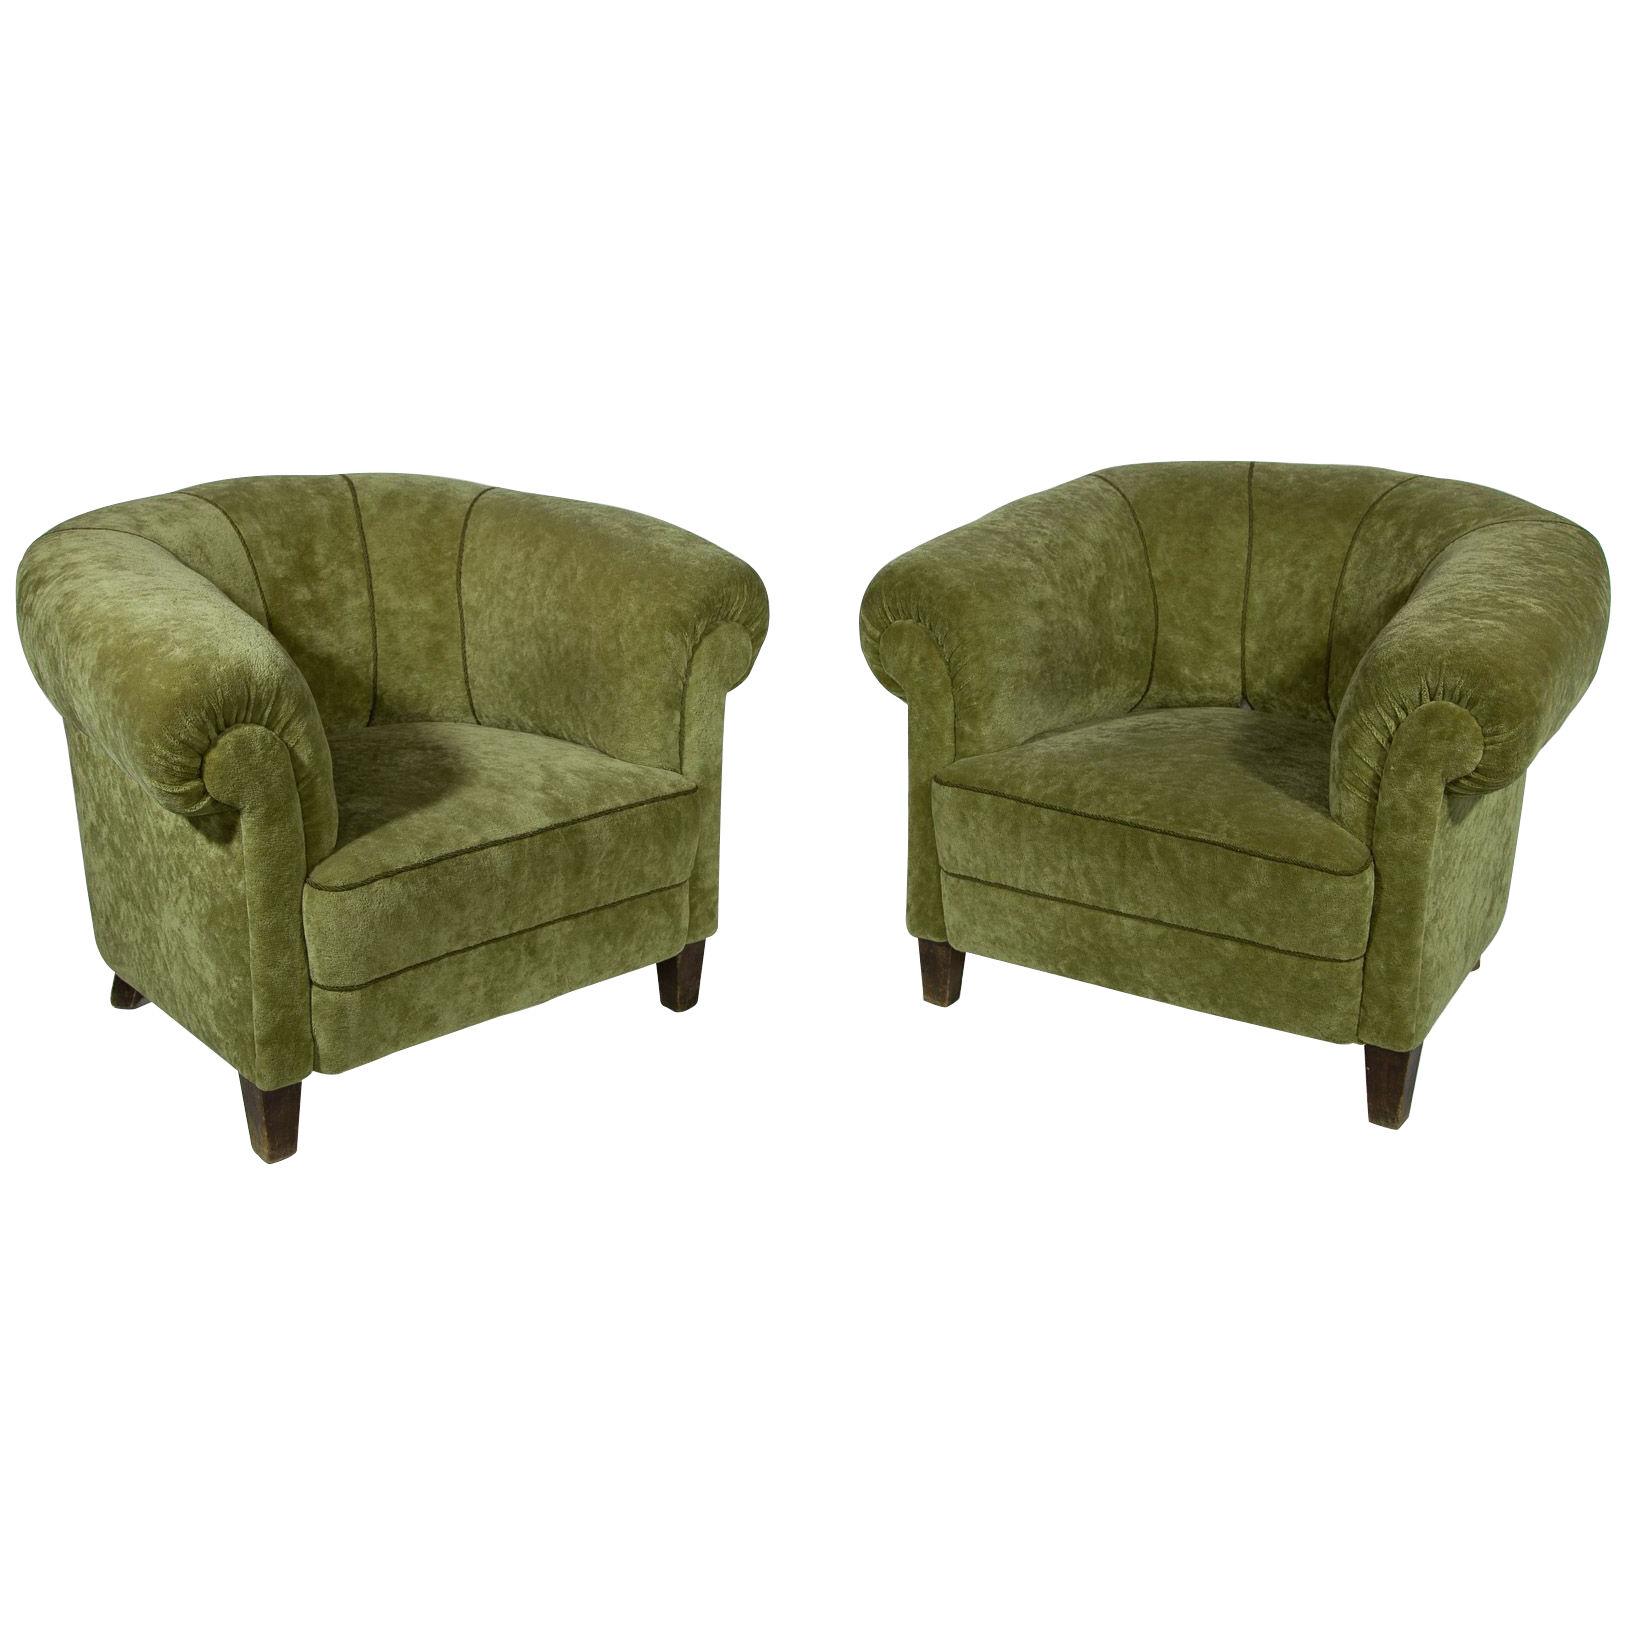 Art Deco Lounge Chairs in Green Olive Velvet Upholstery